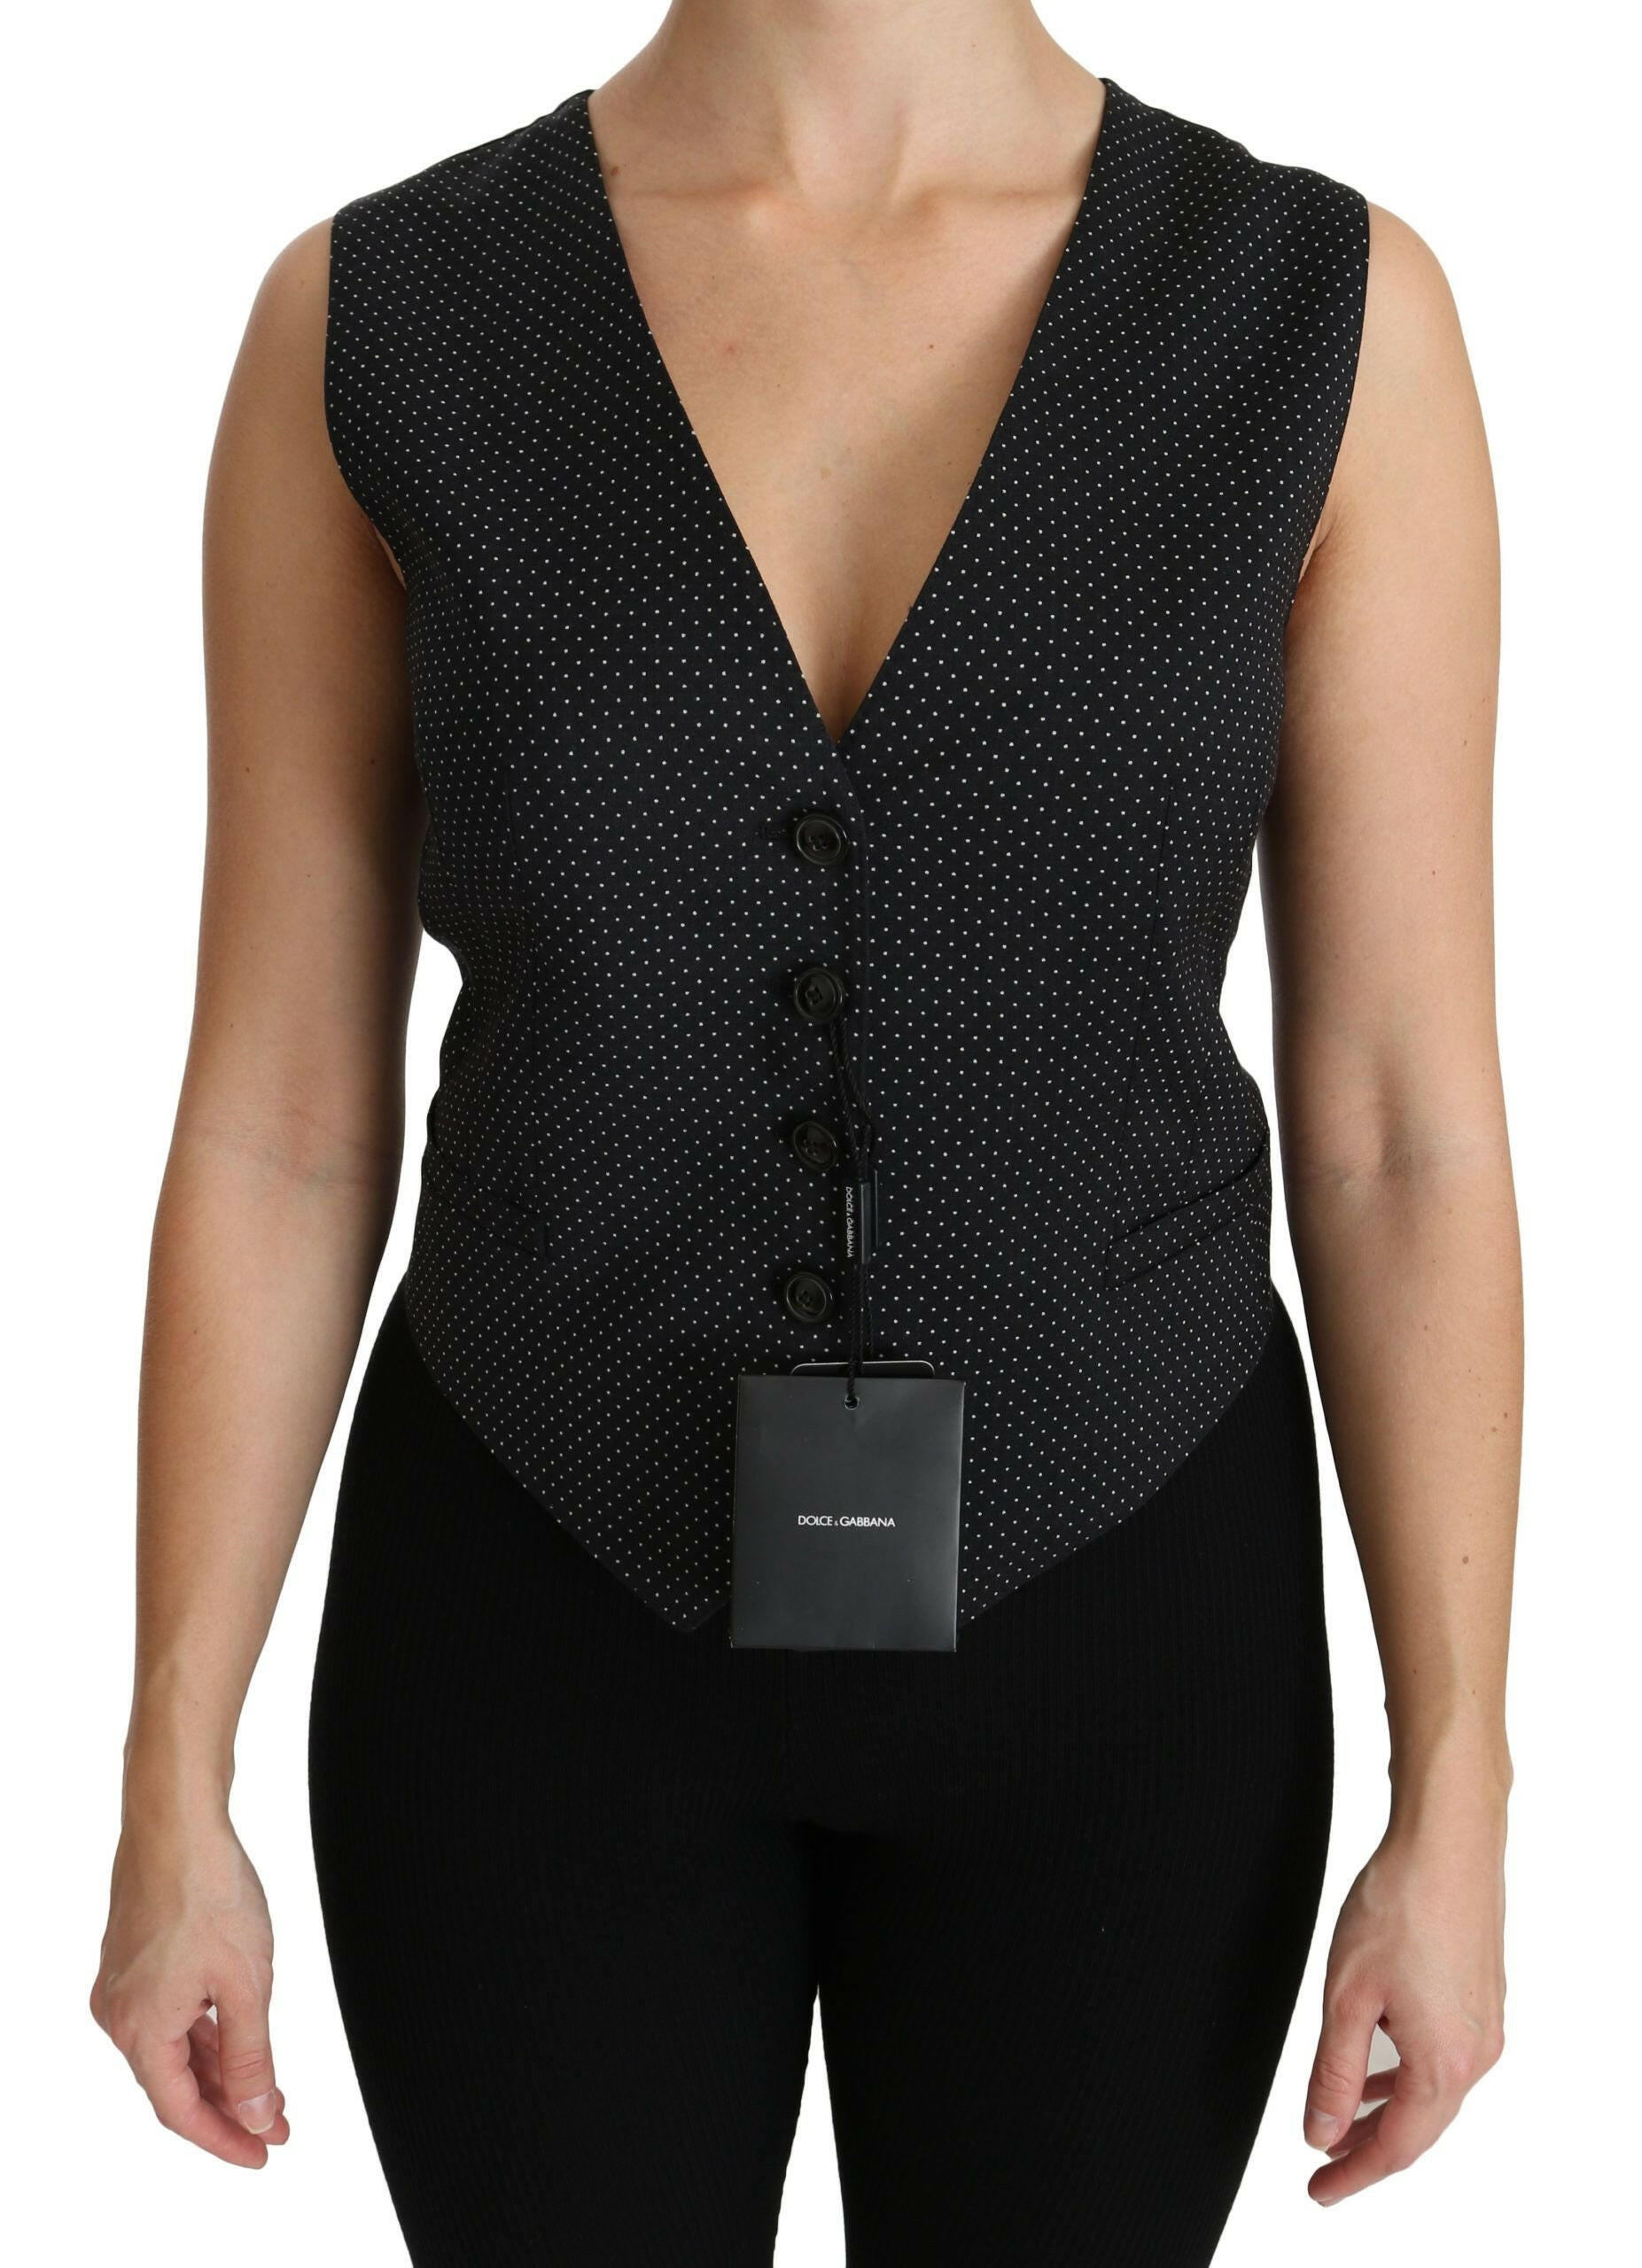 Dolce & Gabbana Black Dotted Waistcoat Vest Blouse Top - GENUINE AUTHENTIC BRAND LLC  